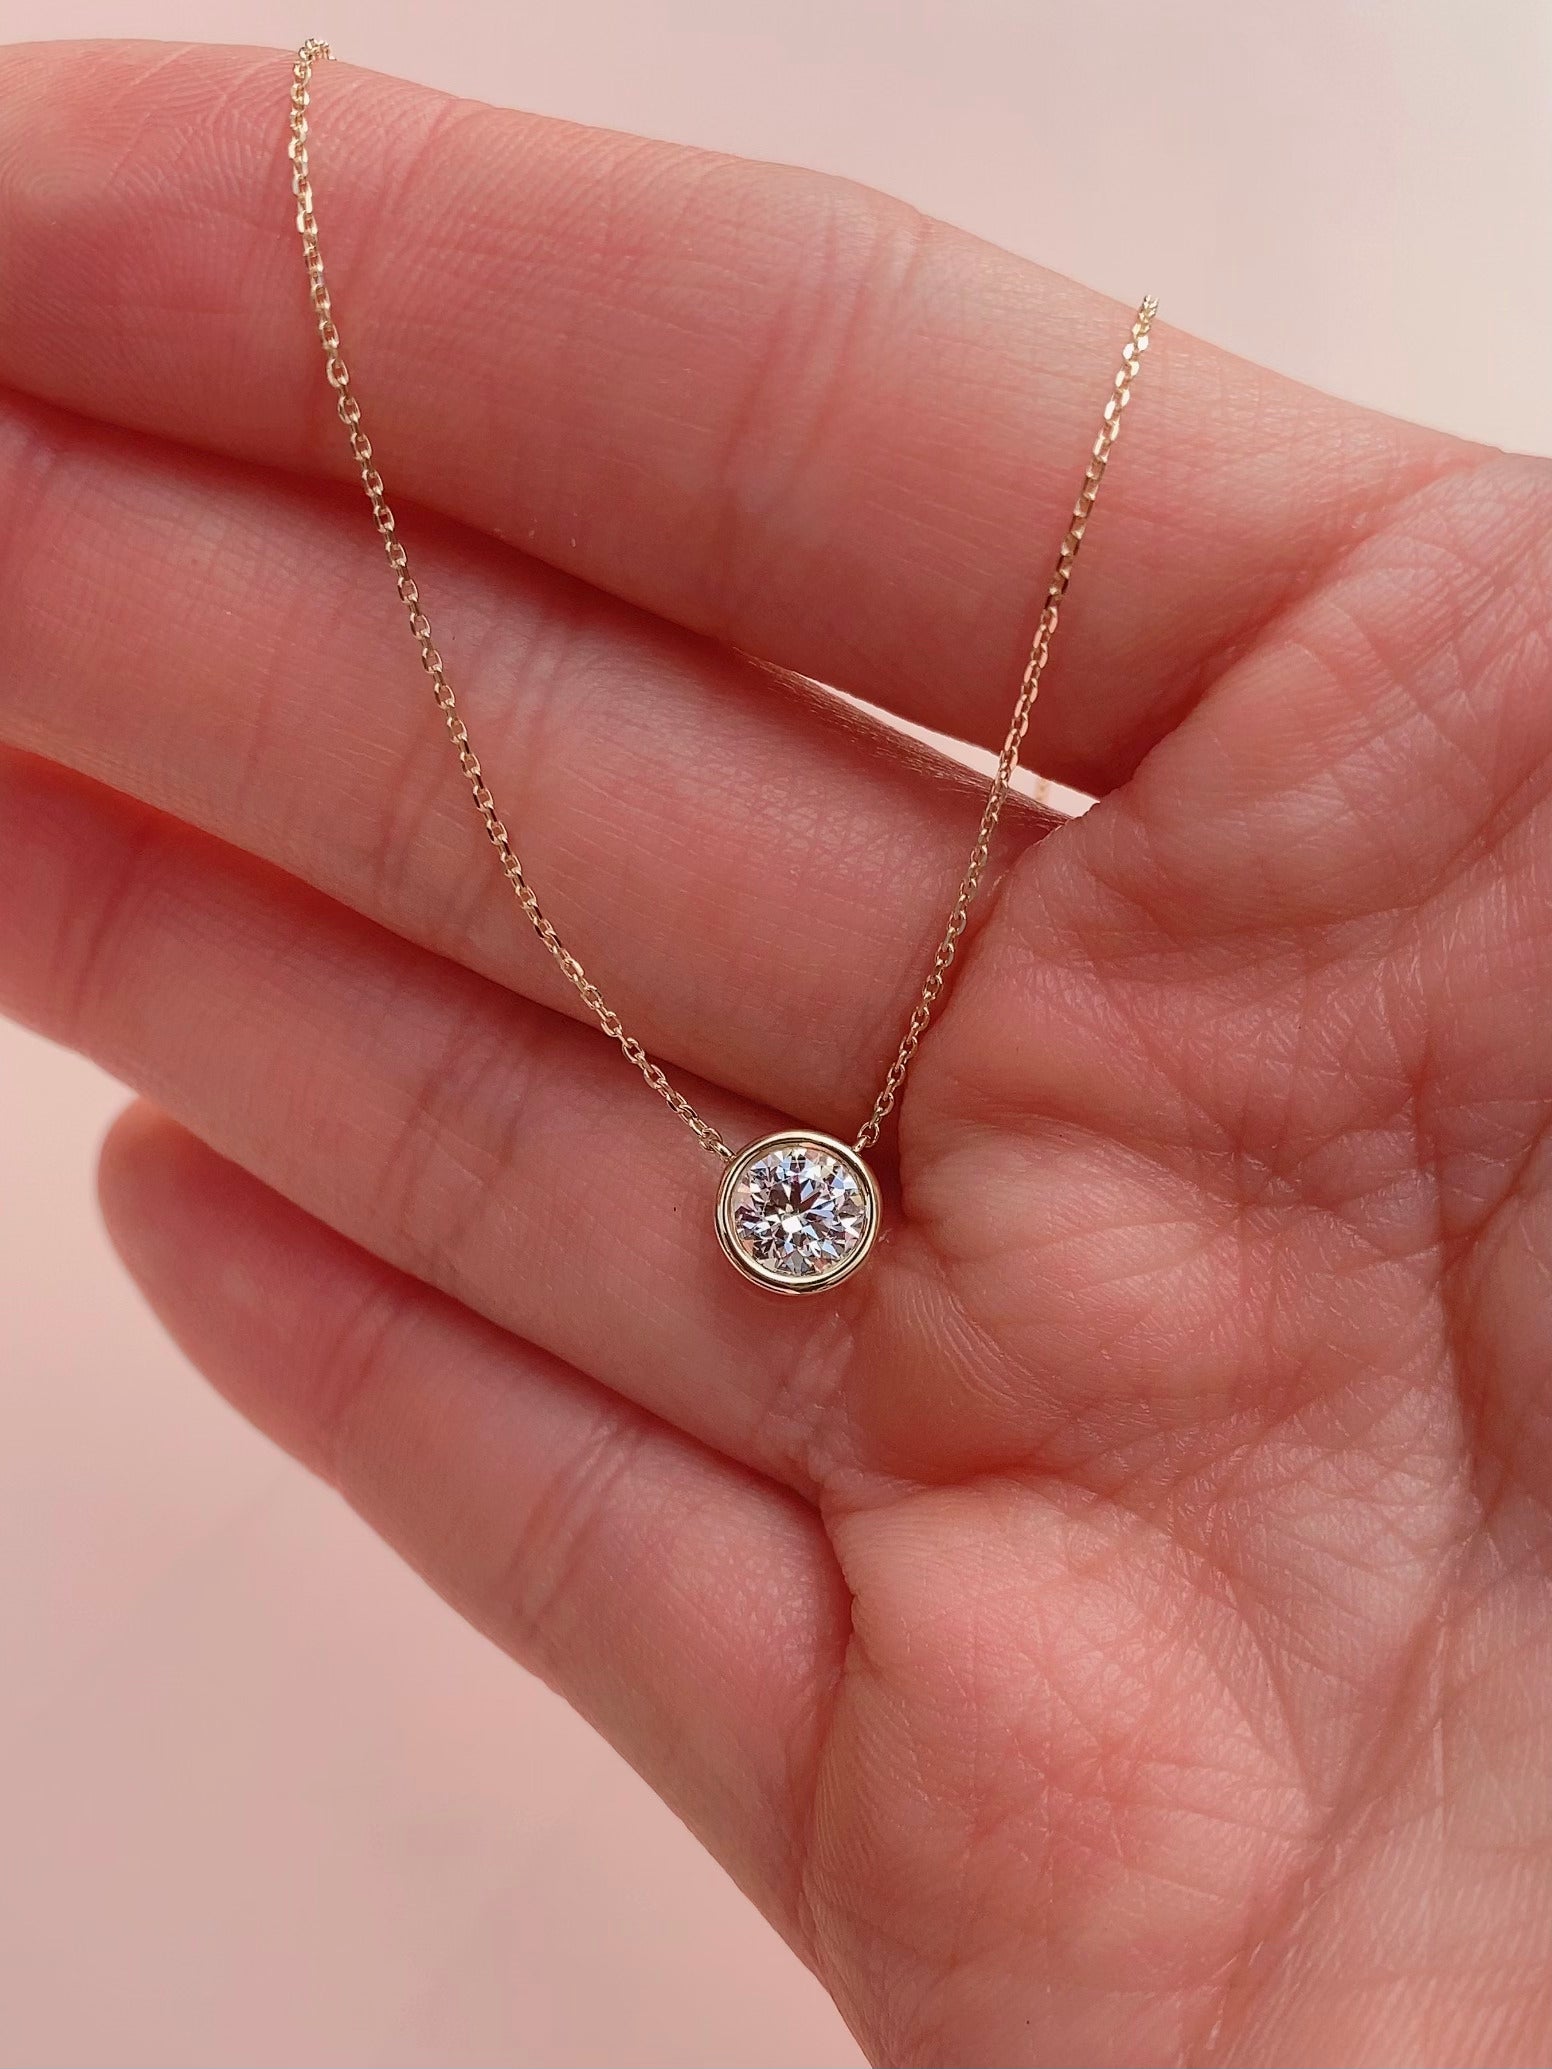 Large Bezel Necklace（ベゼルネックレス）| ラボグロウンダイヤモンド ネックレス